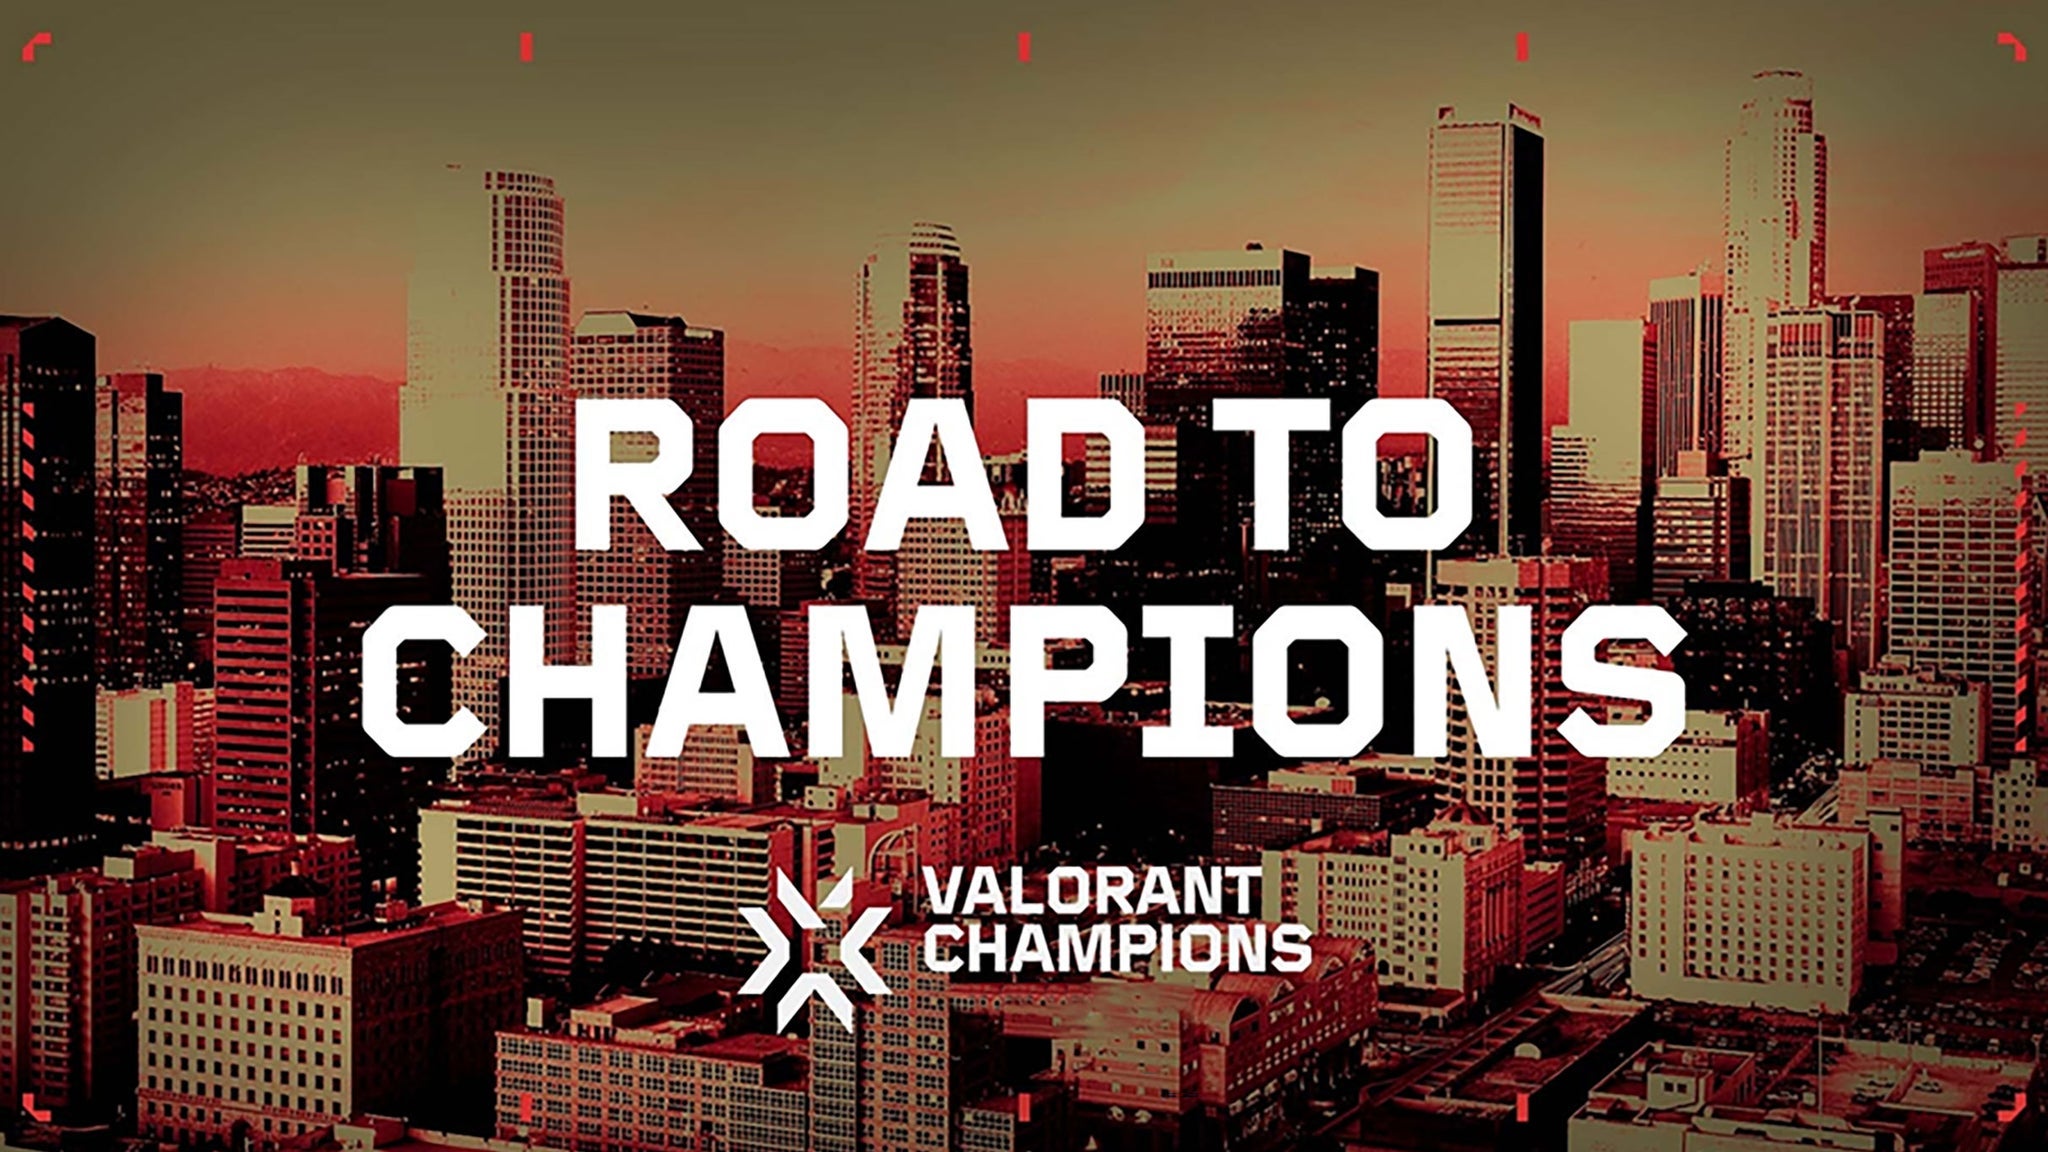 VALORANT Champions Los Angeles: Fase de Grupos (Dia 1) 